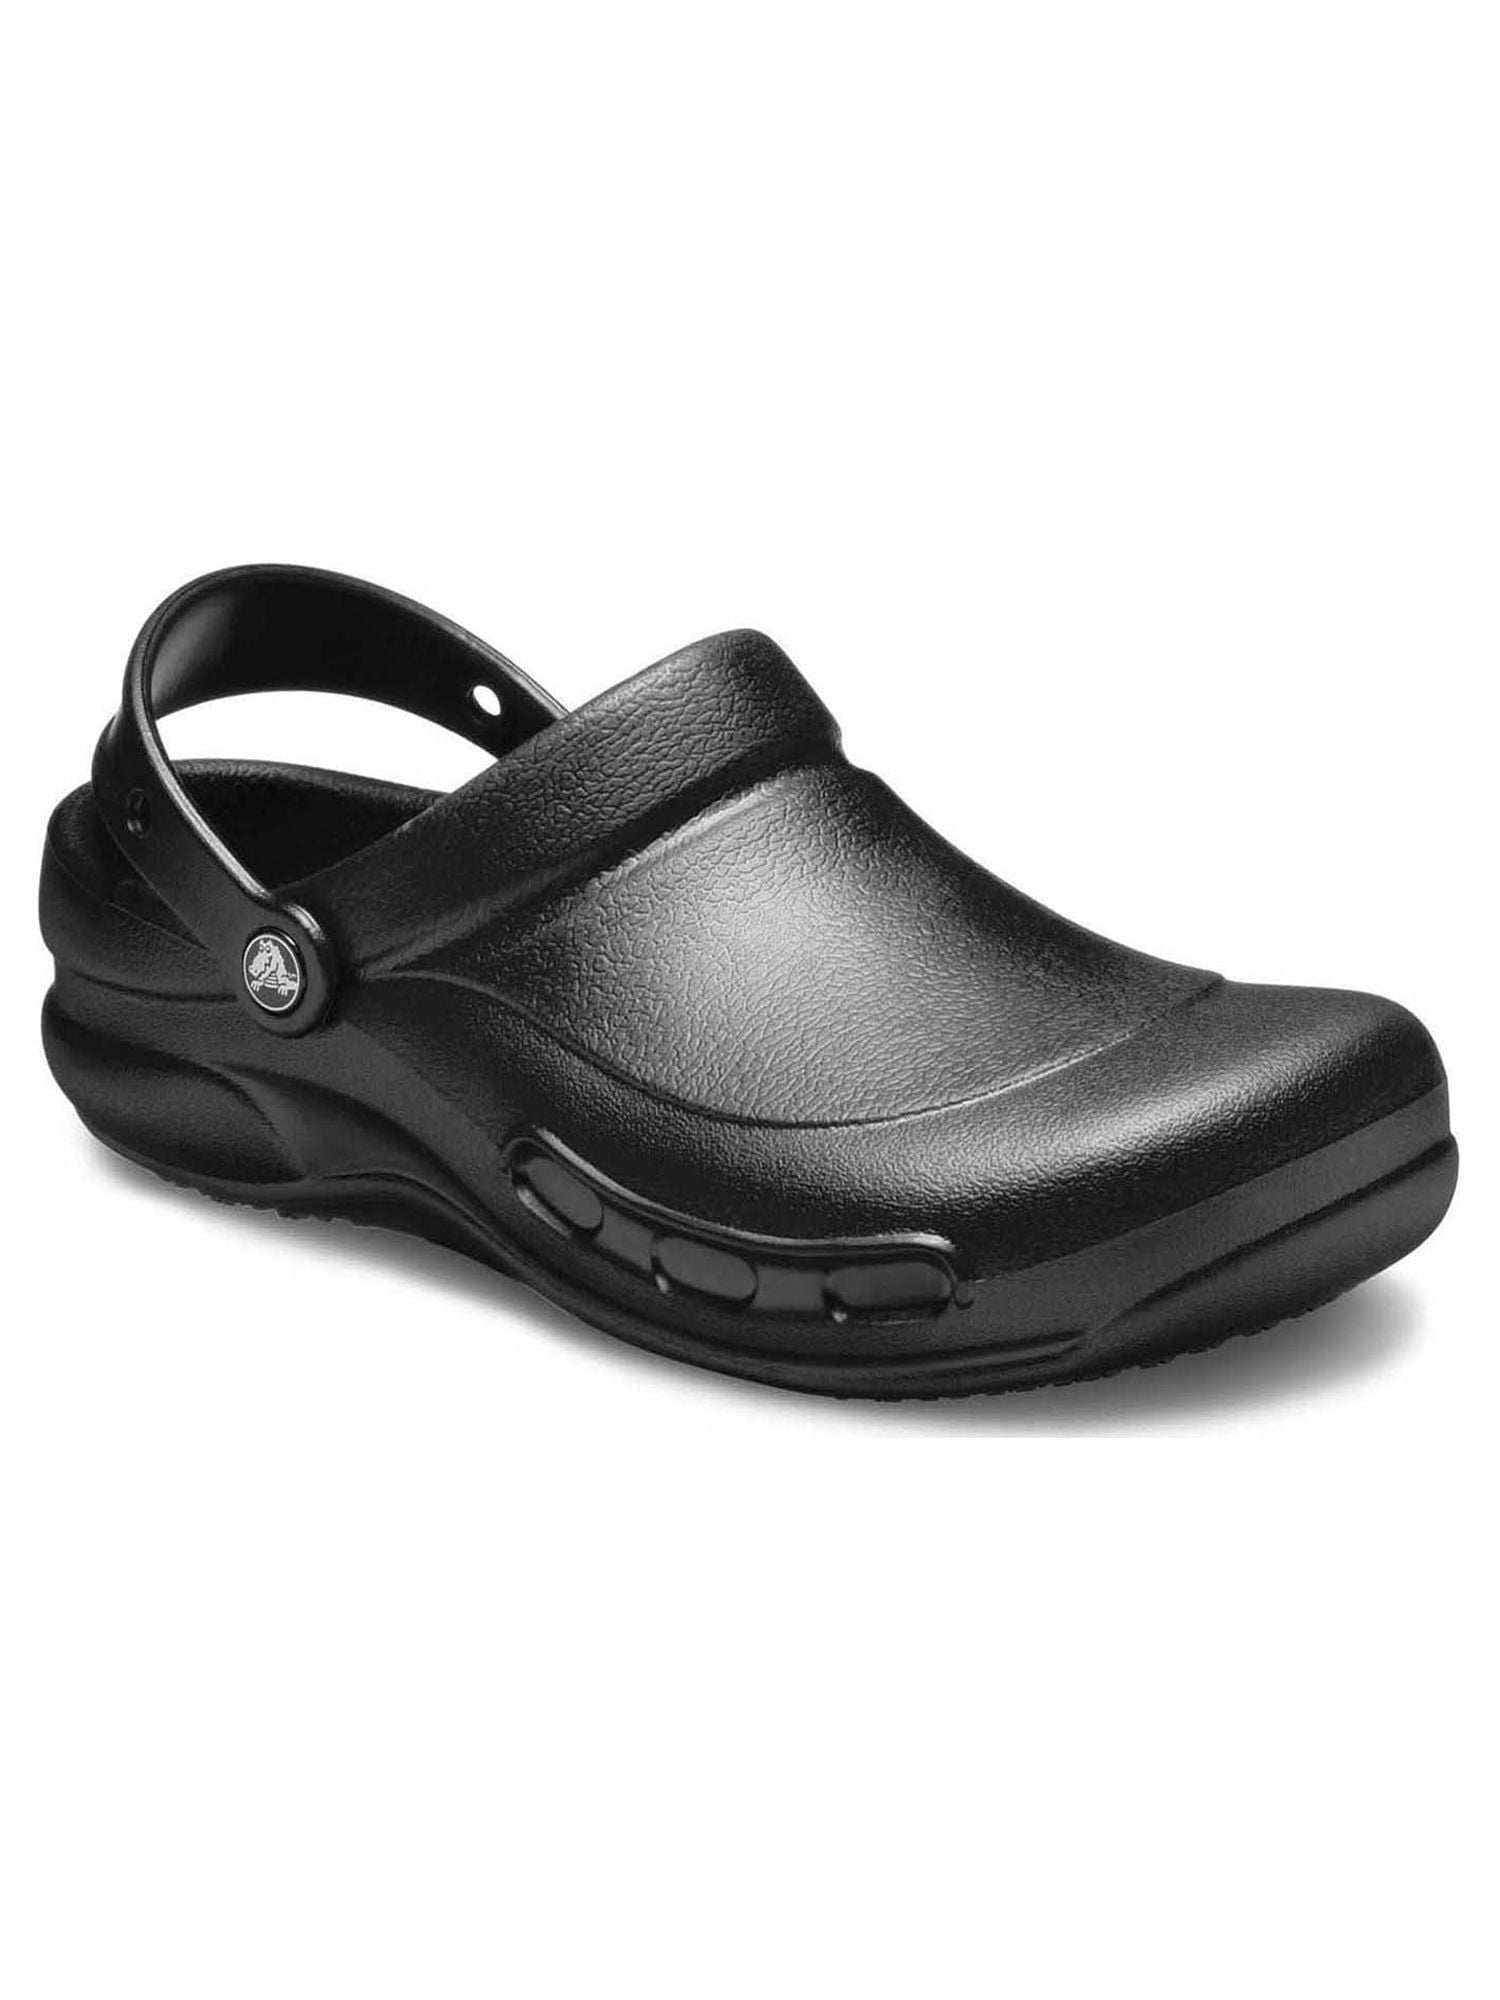 Crocs at Work Unisex Bistro Slip Resistant Clog - Walmart.com